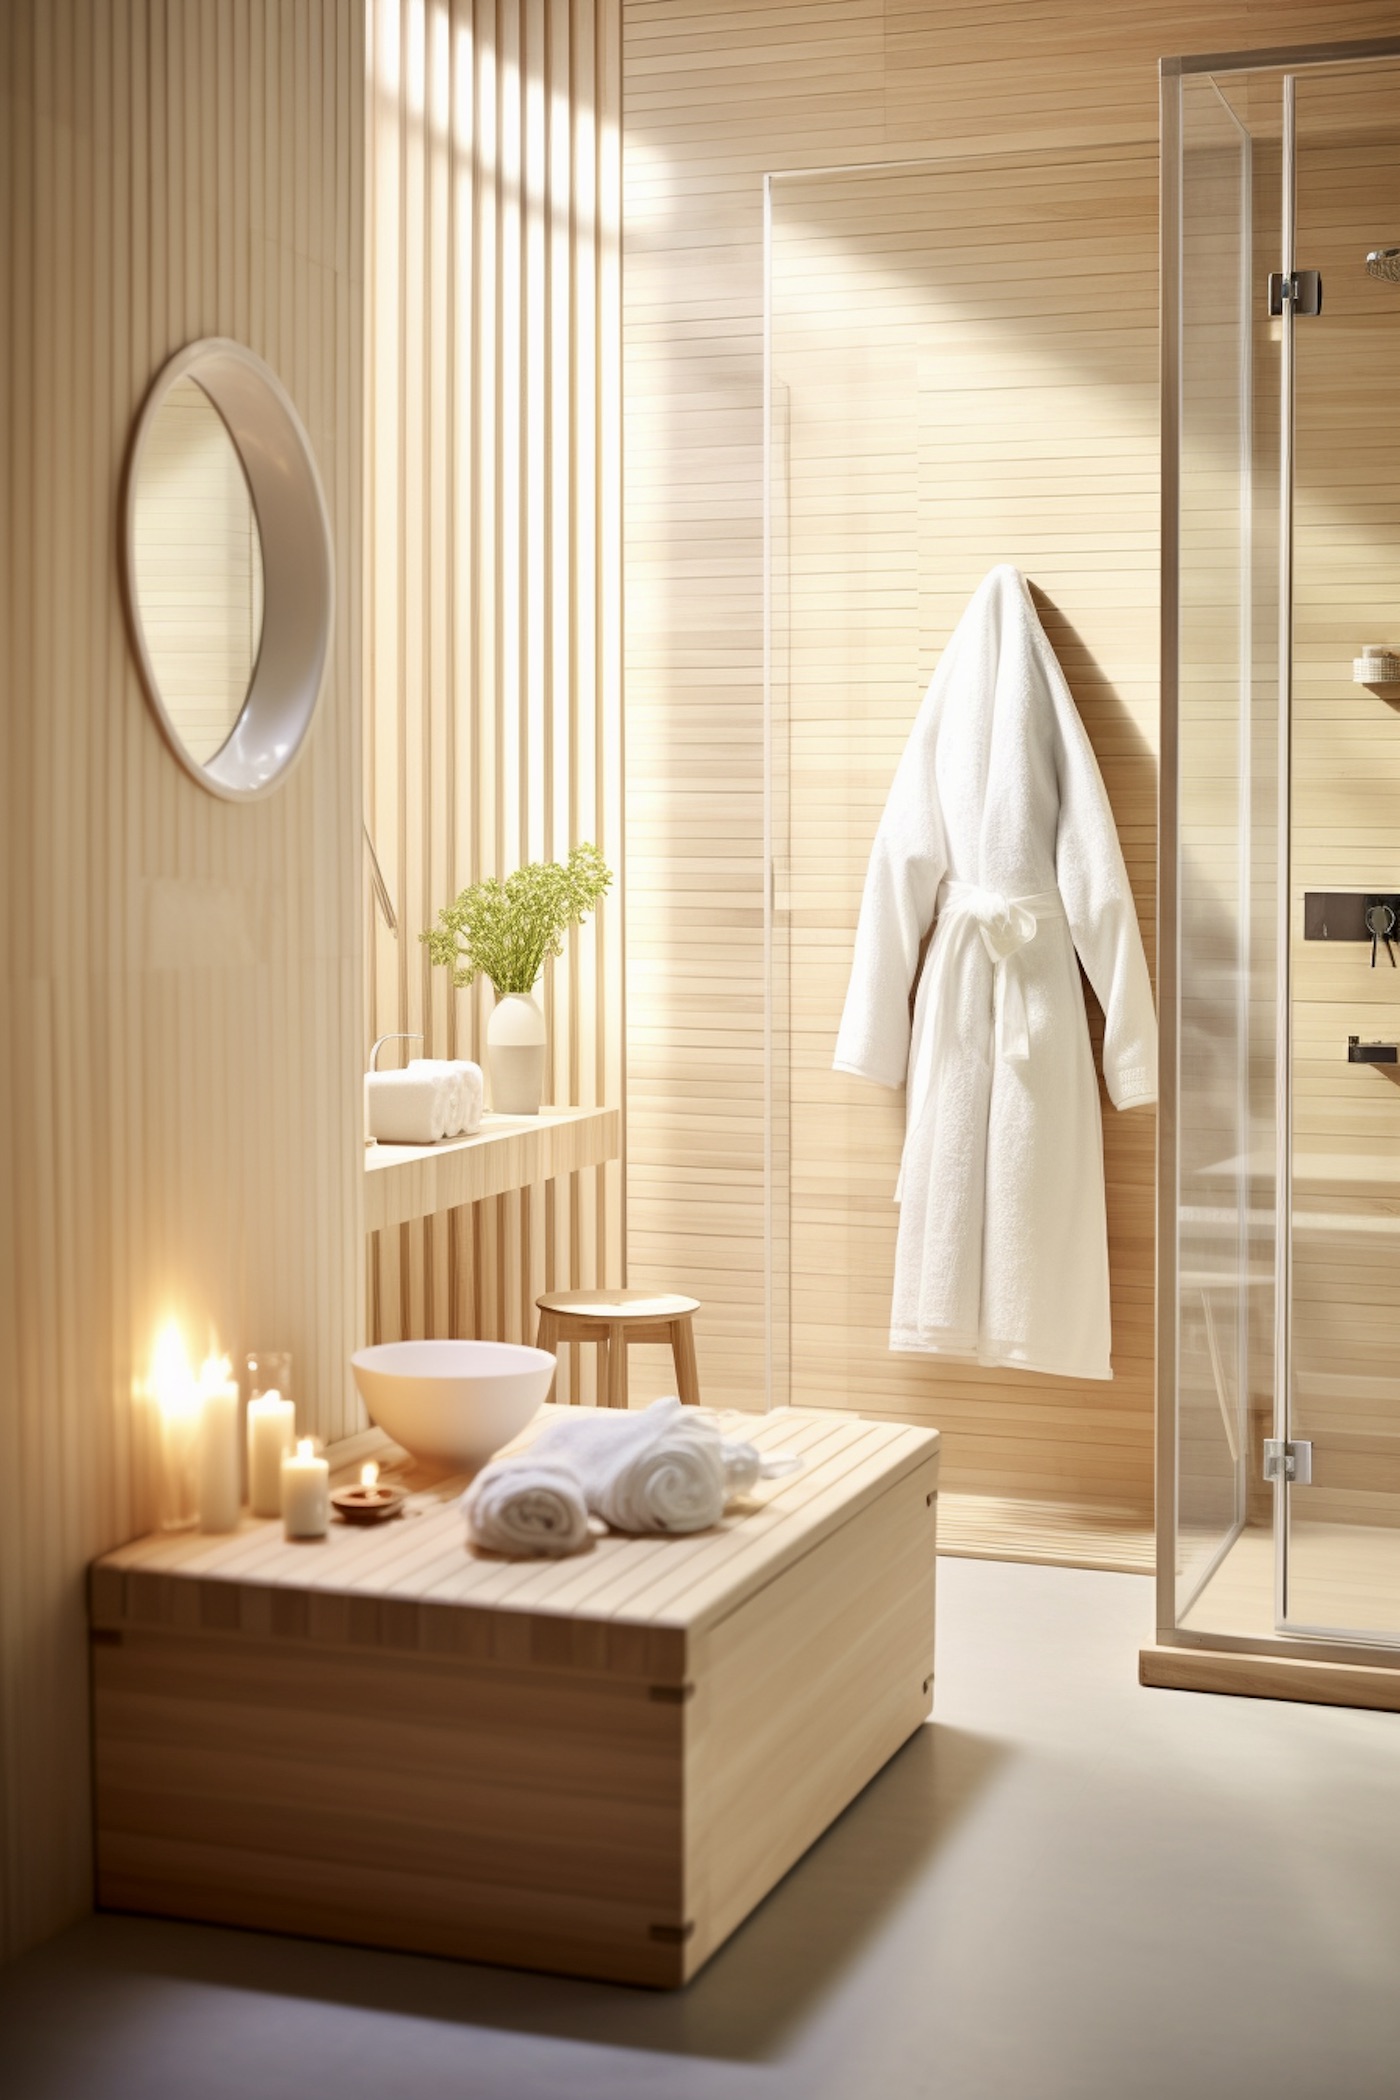 salle de douche finlandaise sauna bois clair